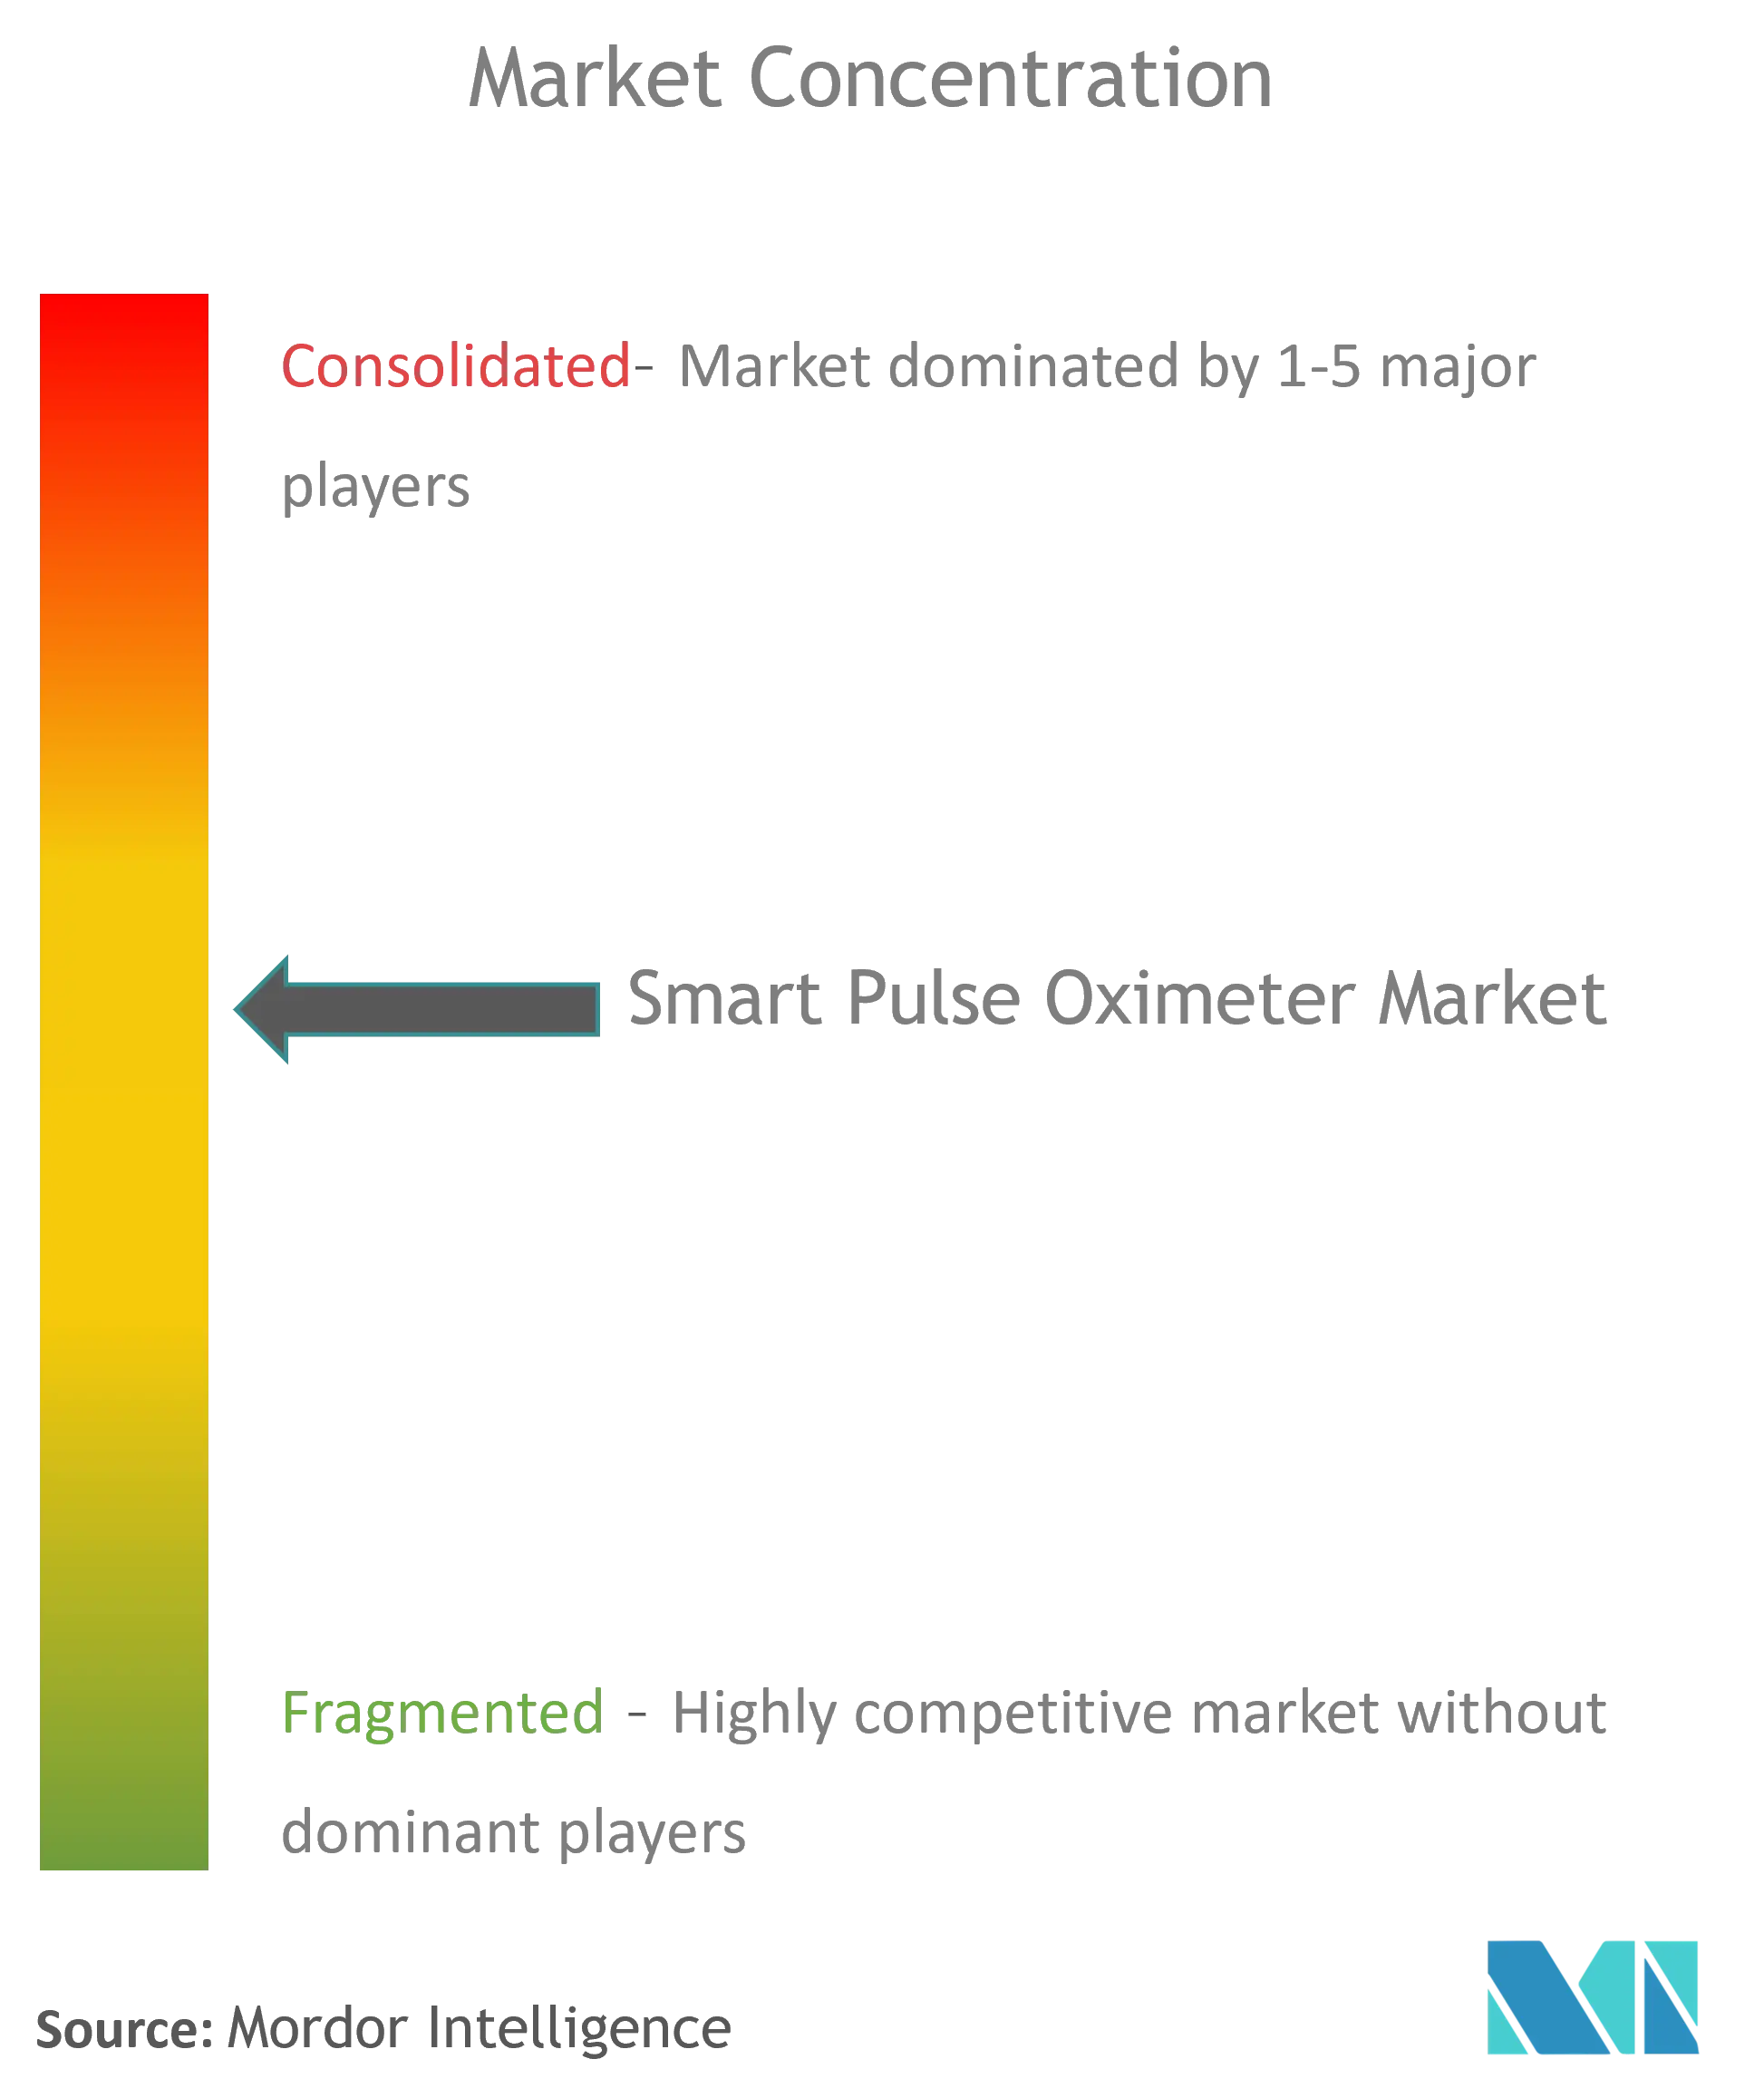 Smart Pulse Oximeters Market Concentration